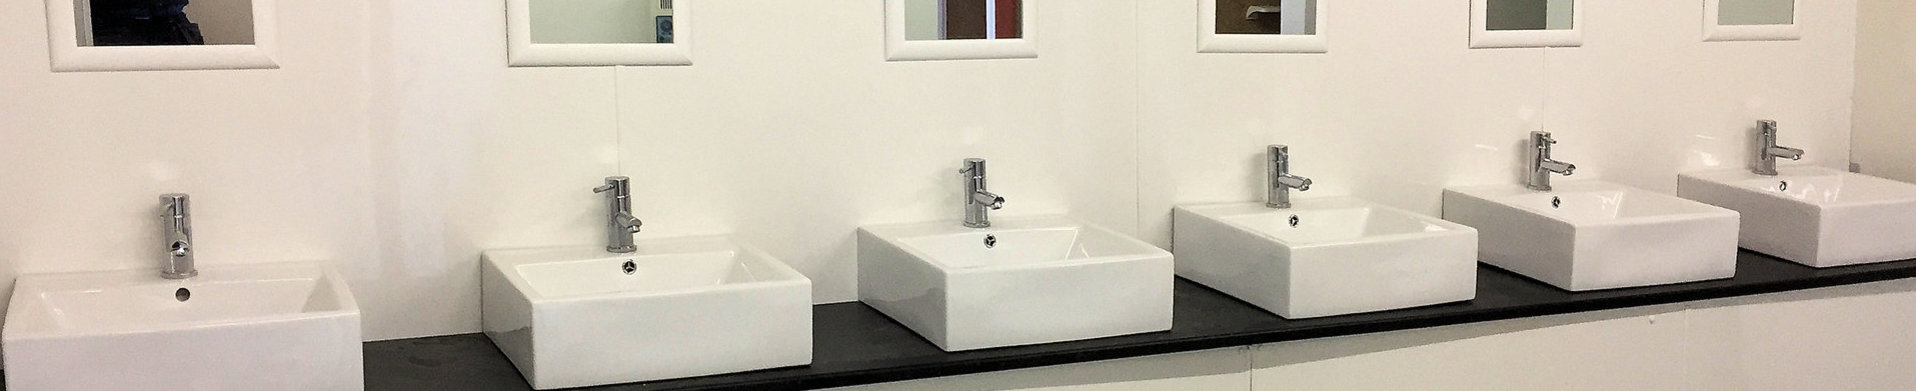 Camp site shower block with belfast sinks in bathroom installations